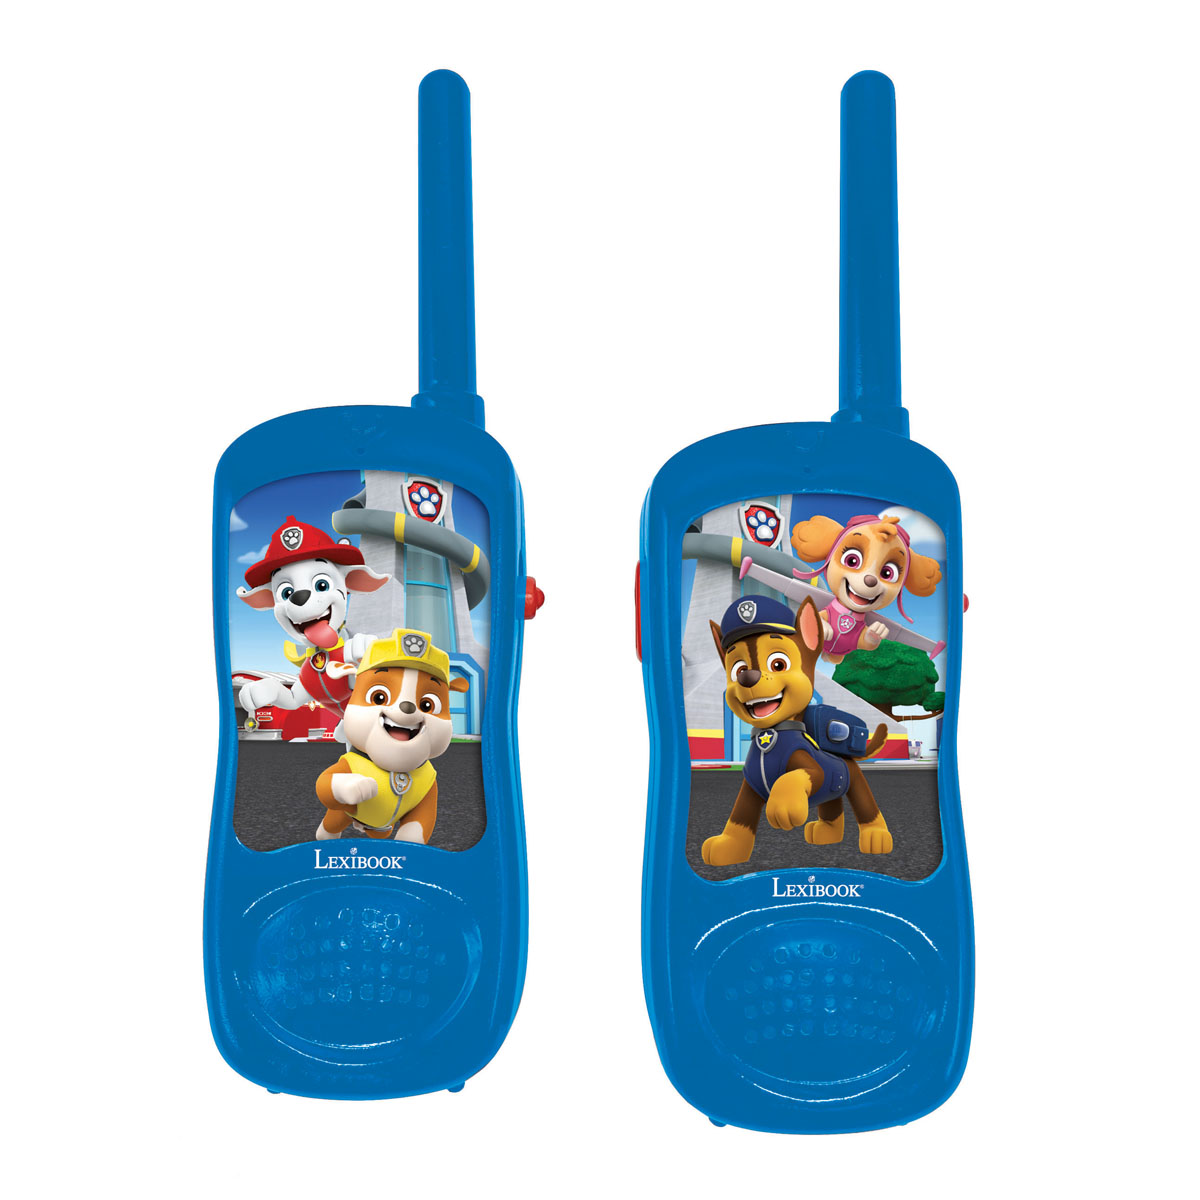 La pat'patrouille - montres talkie-walkie 2 en 1, jeux educatifs